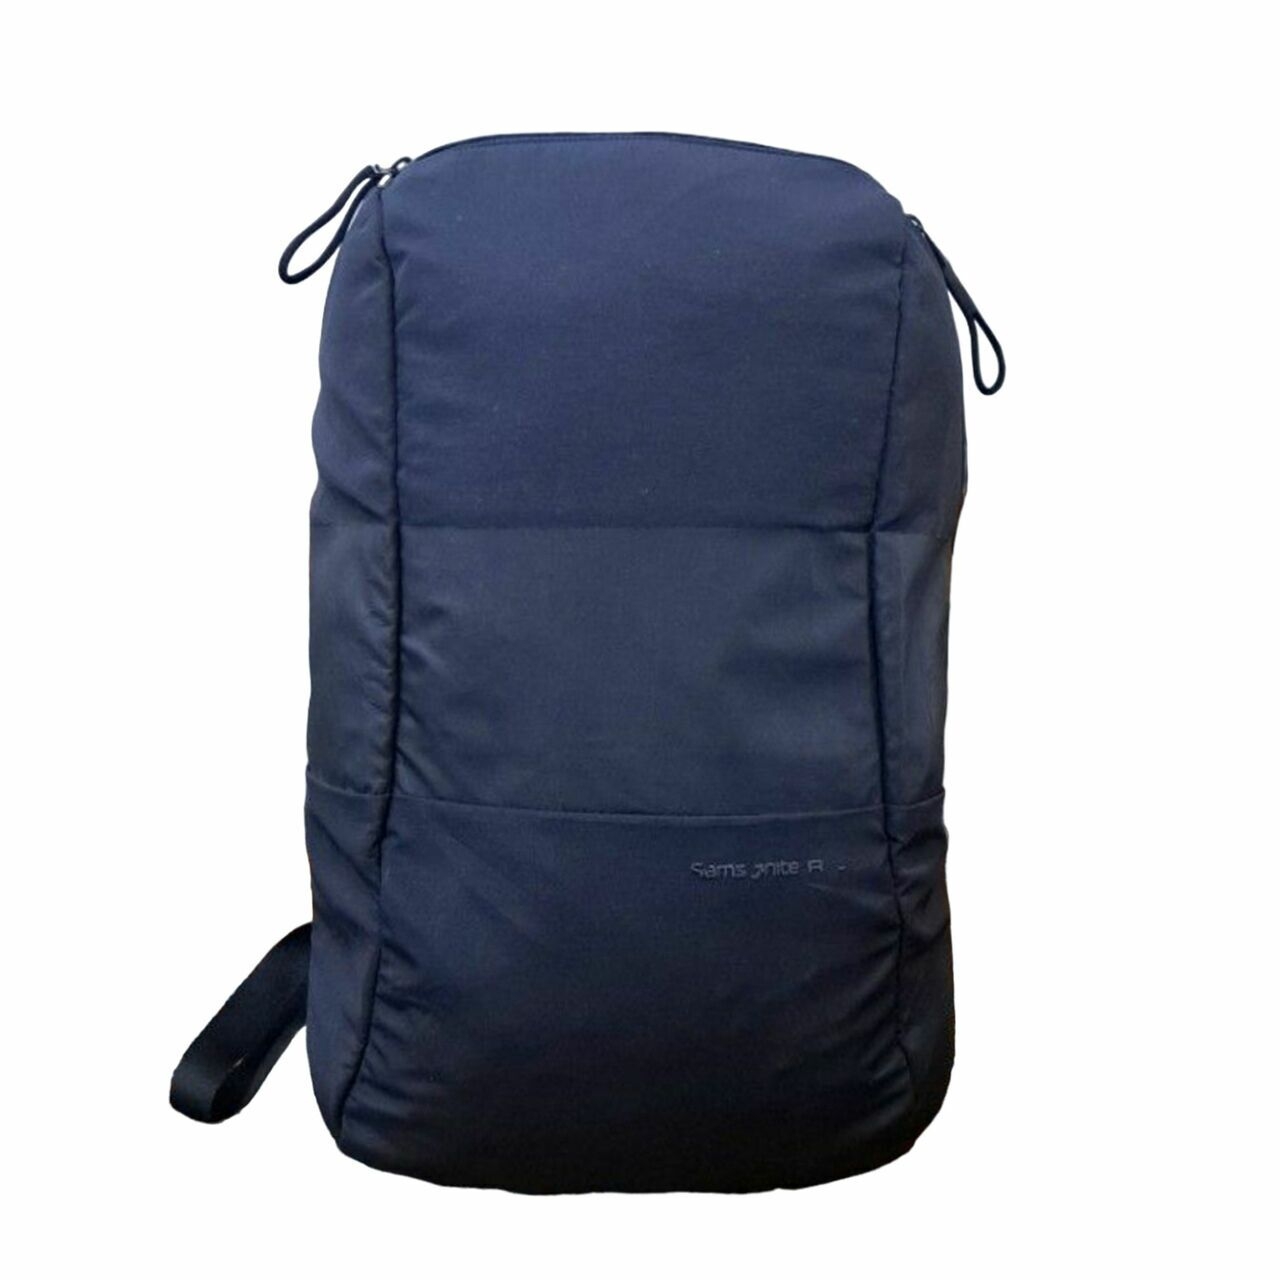 Samsonite Navy Backpack